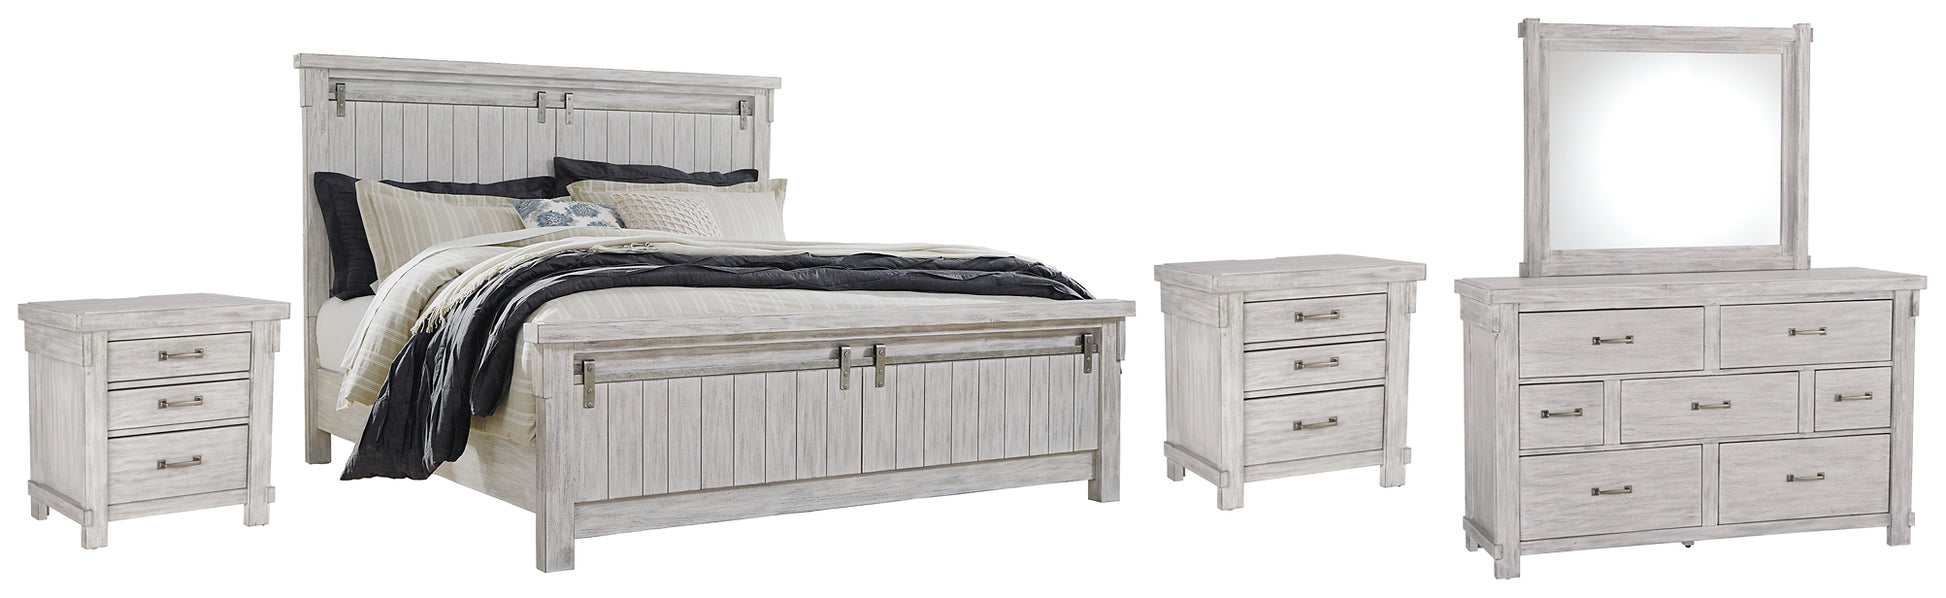 Brashland Queen Panel Bed with Mirrored Dresser and 2 Nightstands Wilson Furniture (OH)  in Bridgeport, Ohio. Serving Bridgeport, Yorkville, Bellaire, & Avondale